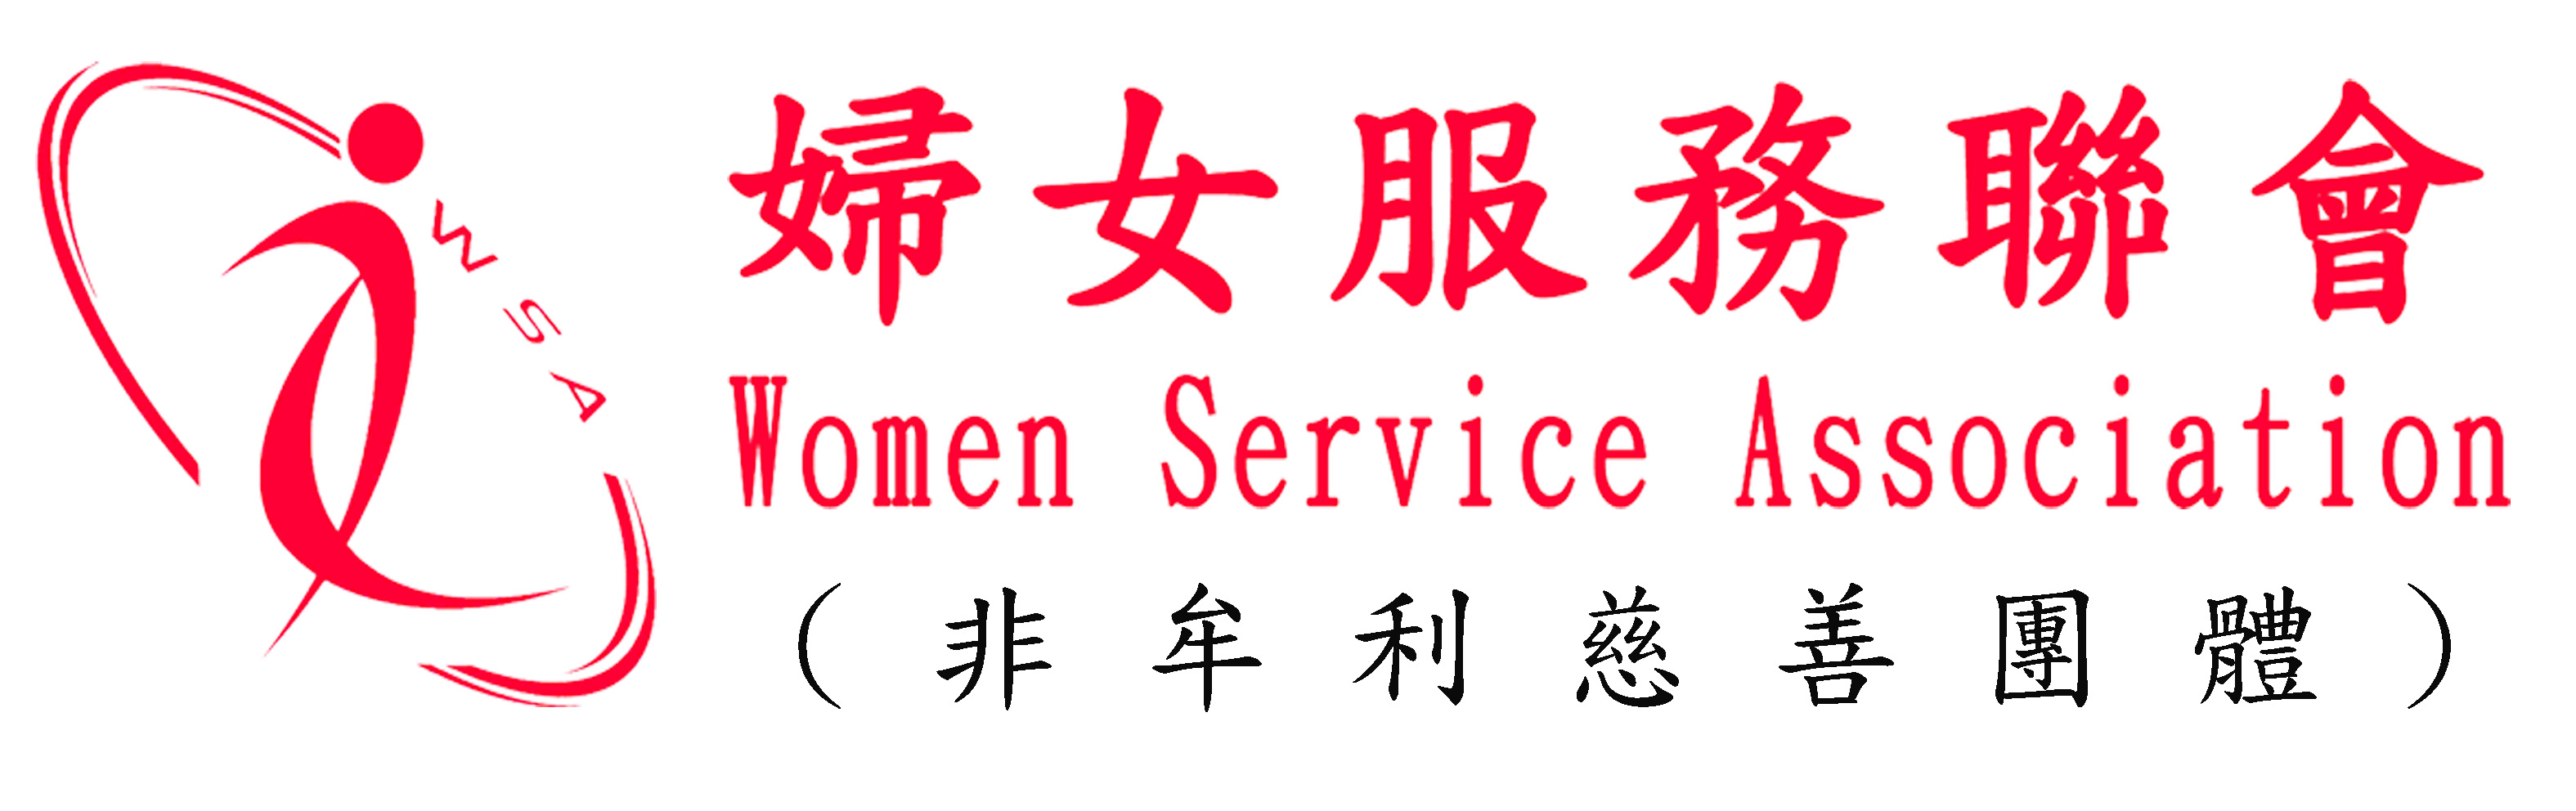 Women Service Association 婦女服務聯會